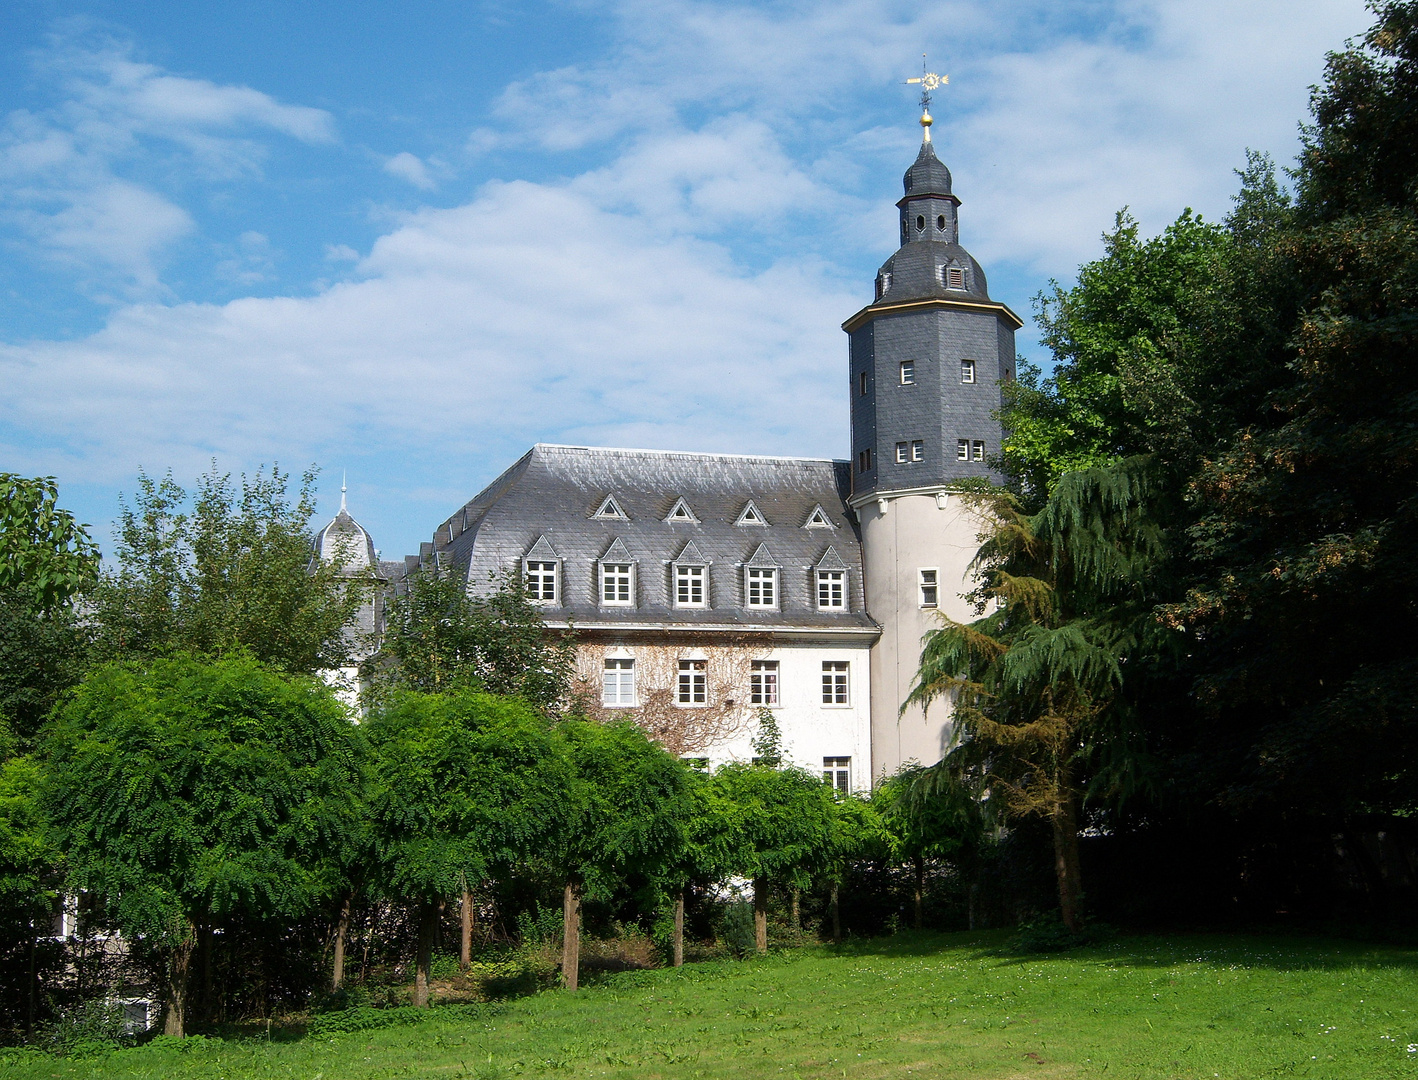 Kloster Walberberg